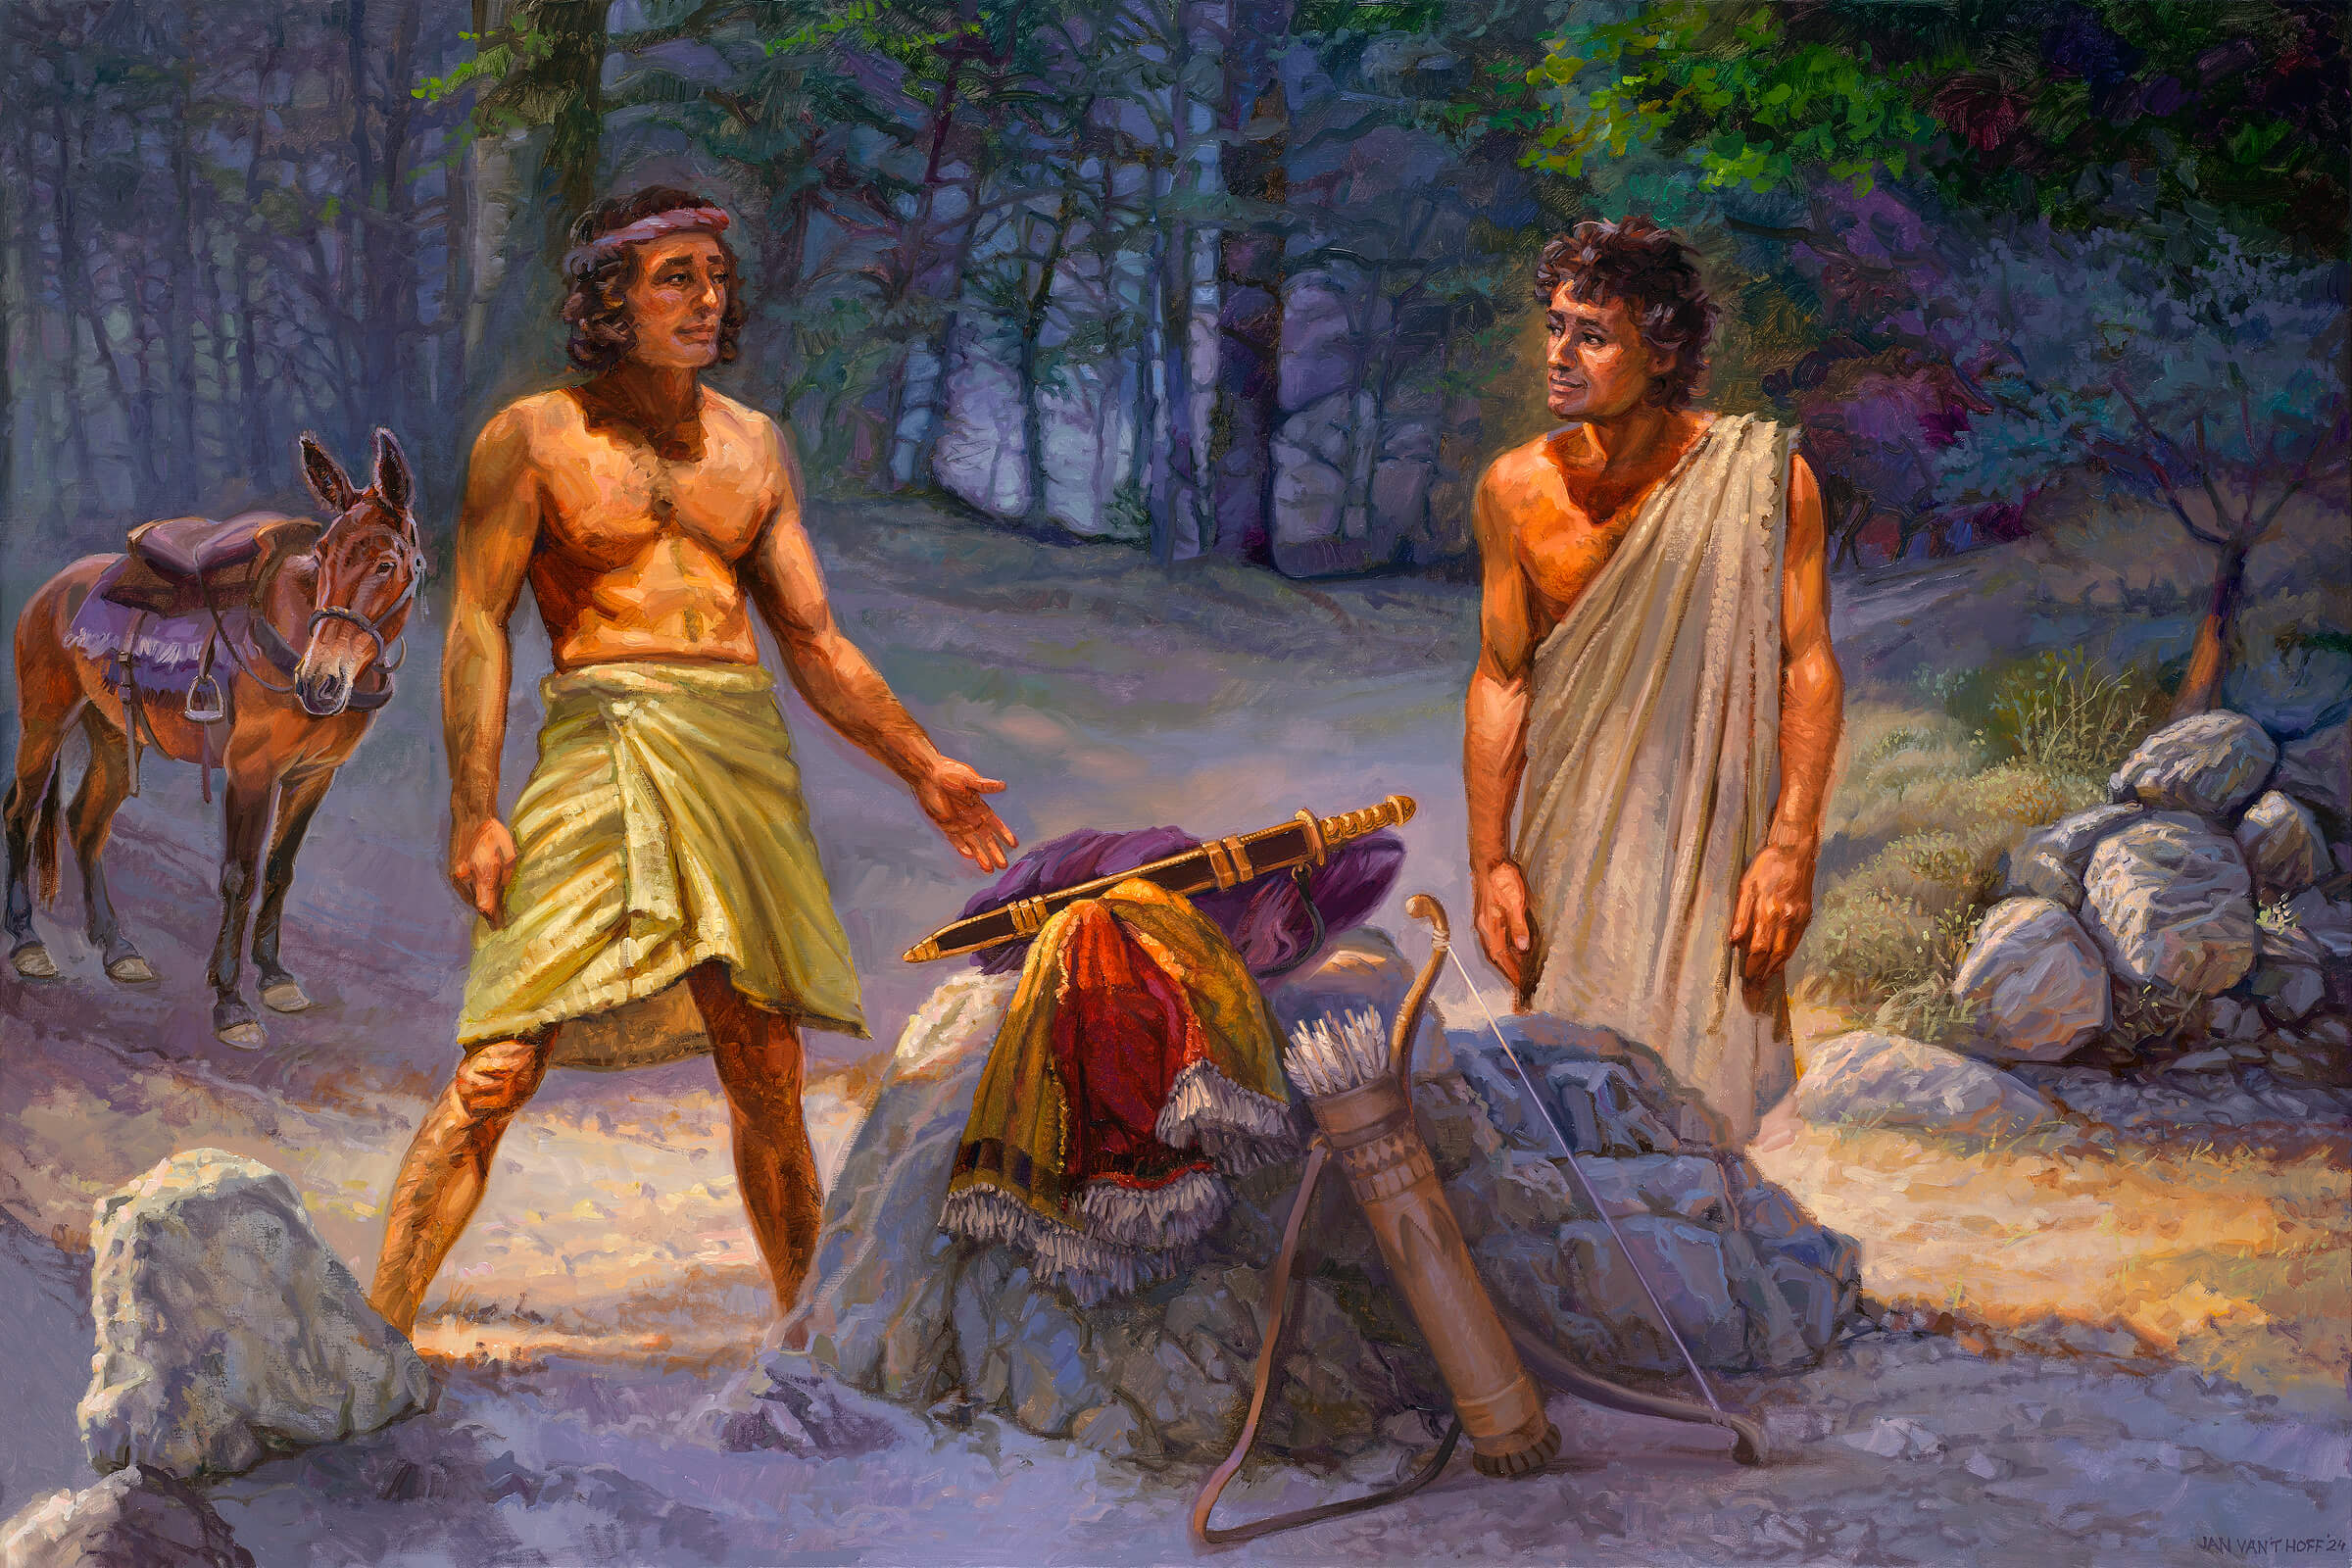 The covenant between Jonathan and David